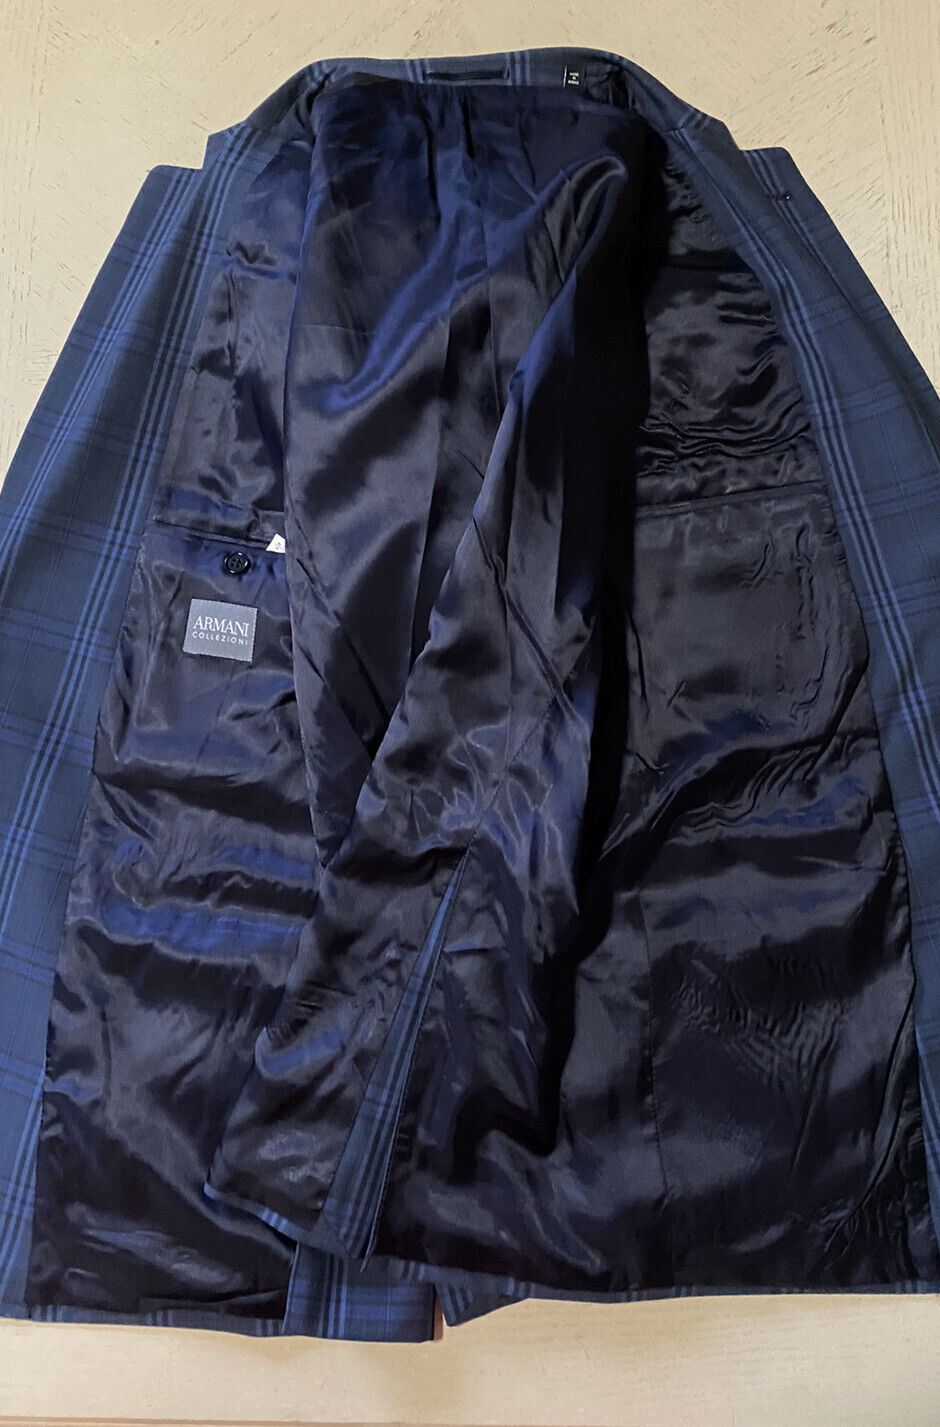 NWT $1495 Armani Collezioni Мужской спортивный пиджак Синий 42R US/52R EU